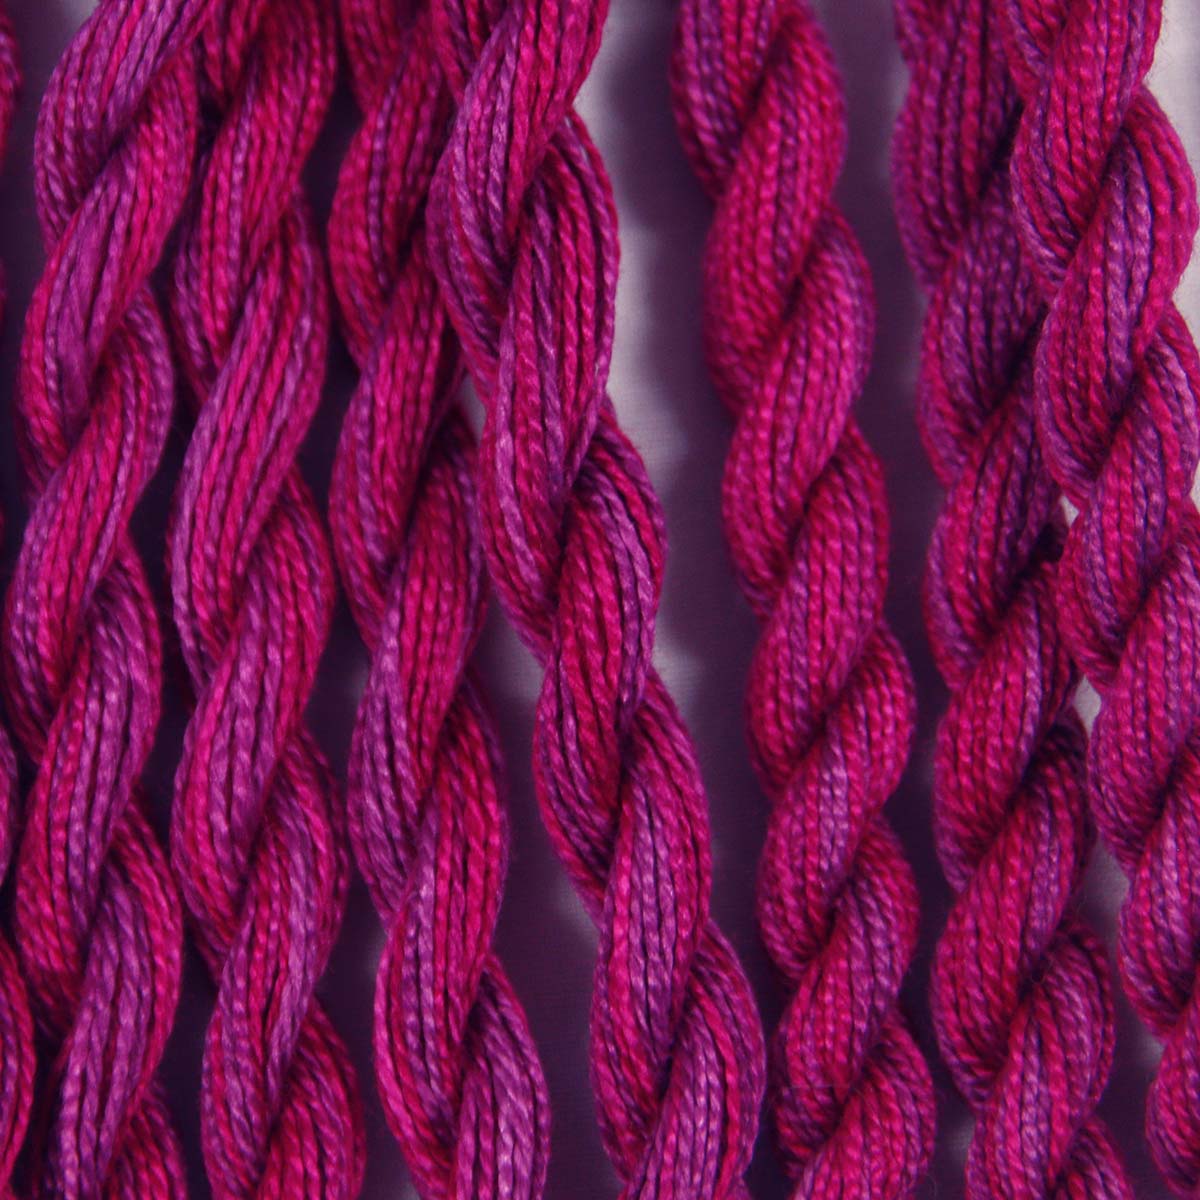 www.colourstreams.com.au Colour Streams Hand Dyed Swww.colourstreams.com.au Colour Streams Hand Dyed Cotton Threads Cotto Strands Slow Stitch Embroidery Textile Arts Fibre DL 54 Lipstick Pinks Purples